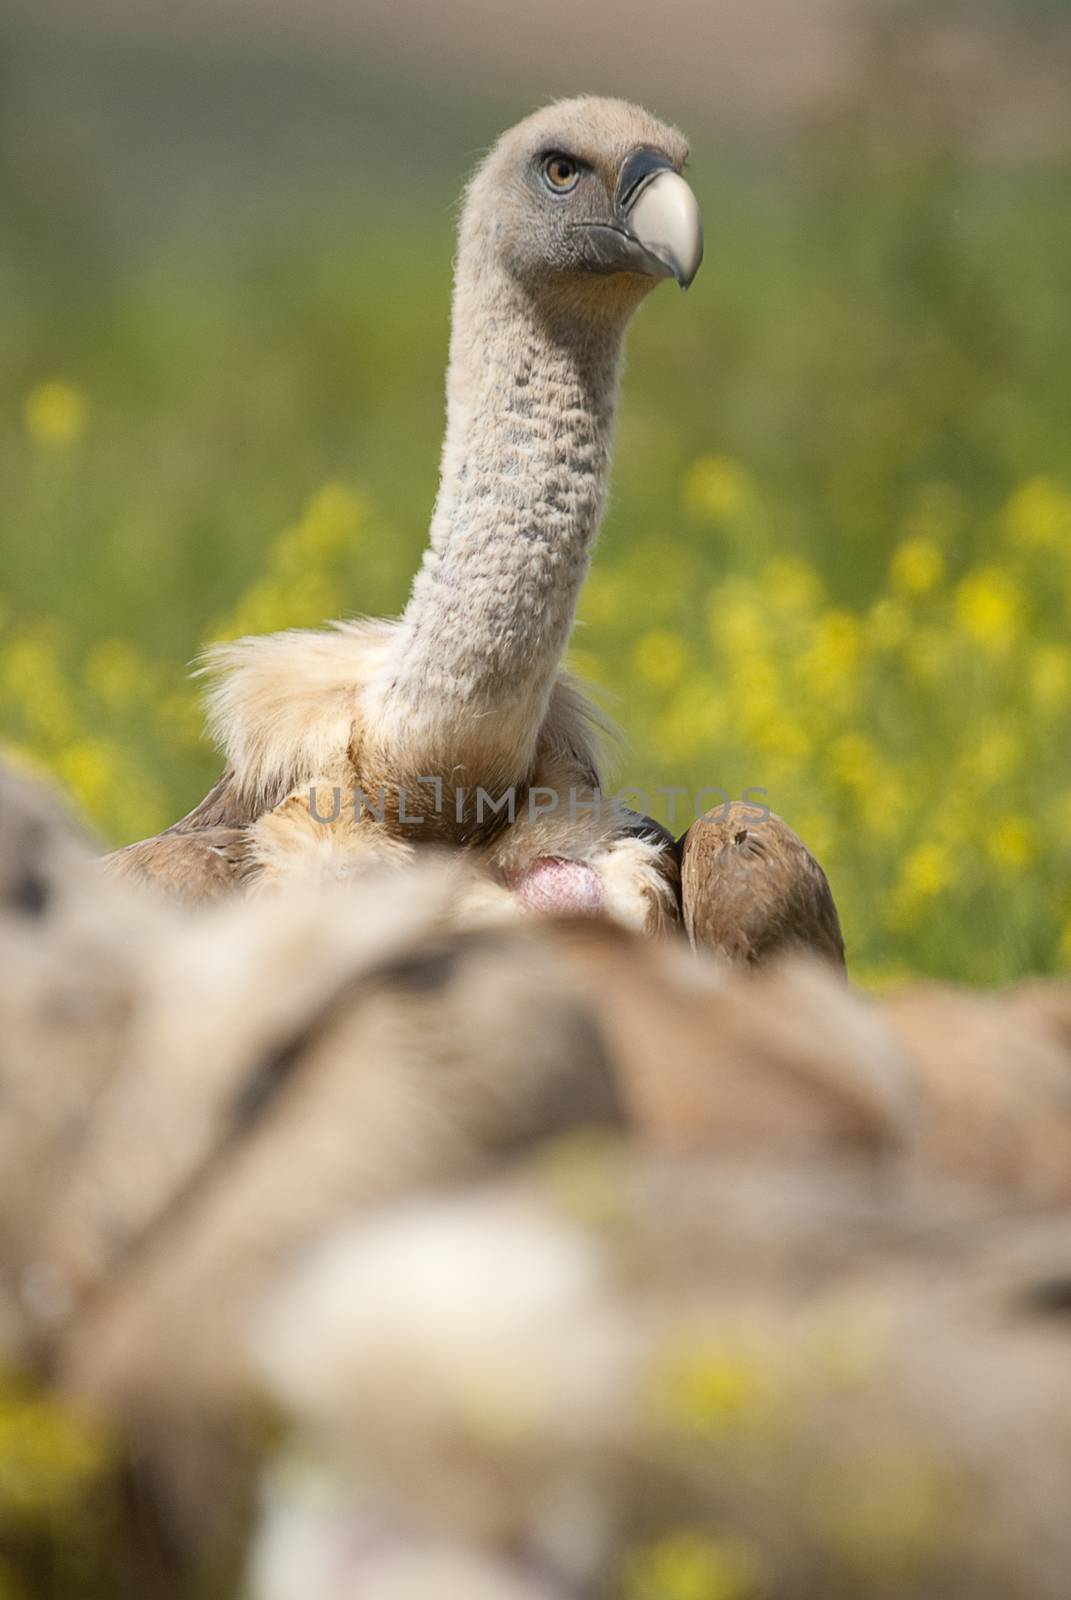 Griffon Vulture (Gyps fulvus) close-up, eyes and beak by jalonsohu@gmail.com